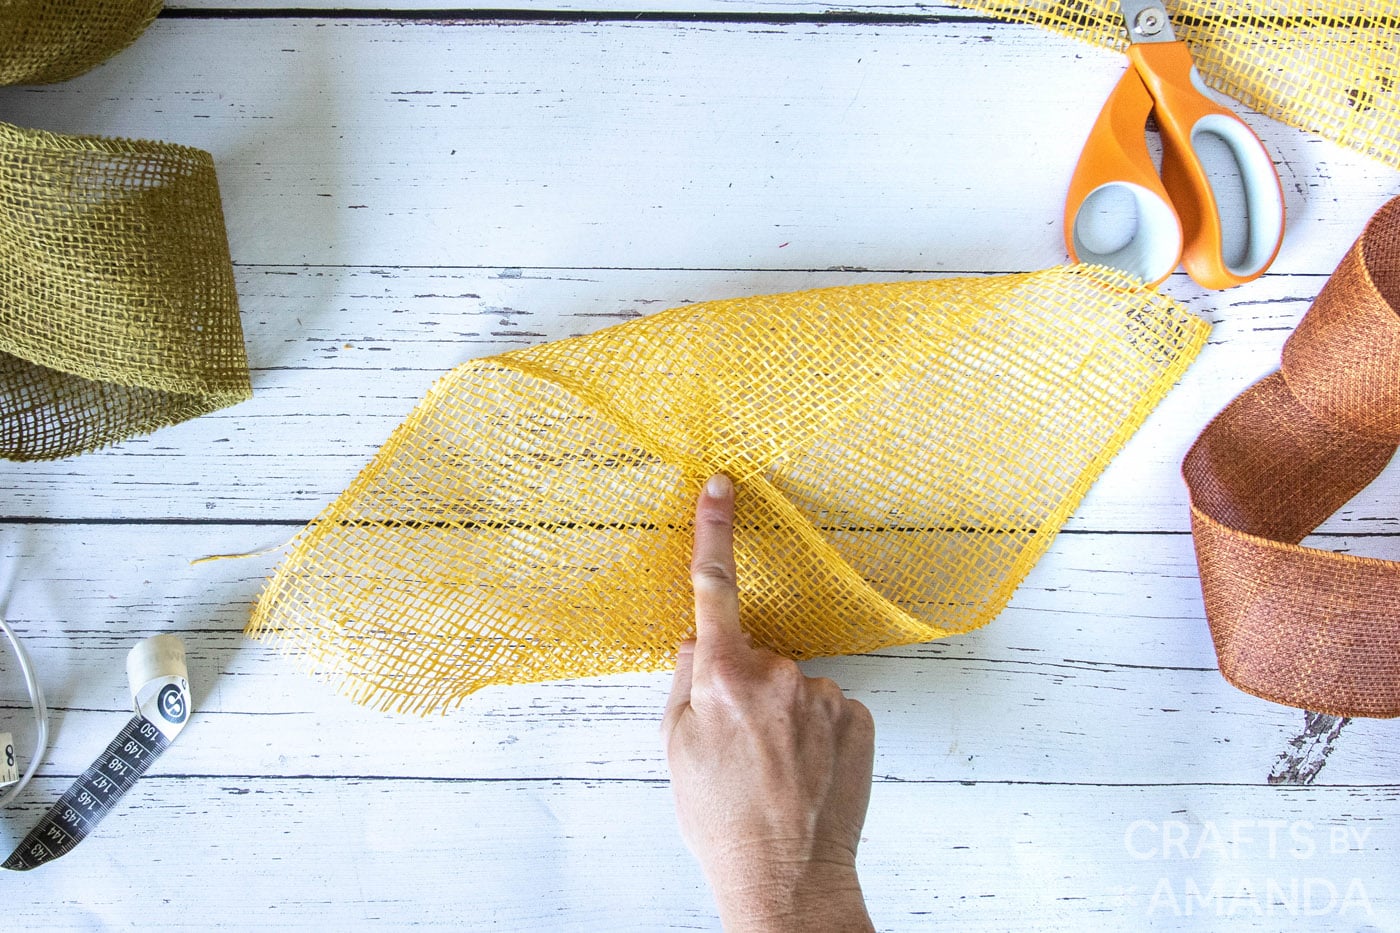 Folding yellow burlap in half